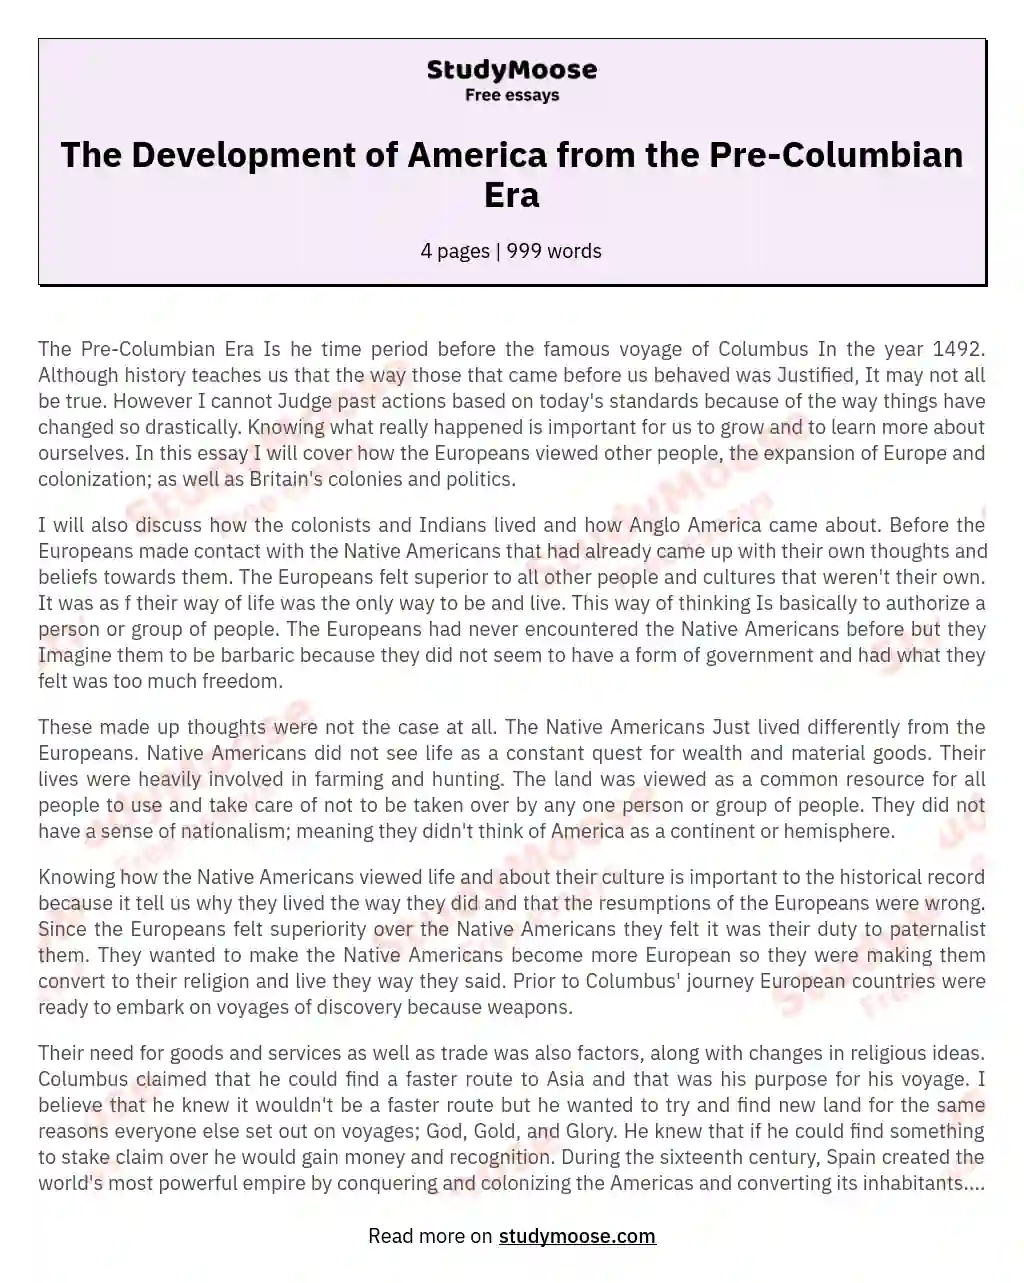 The Development of America from the Pre-Columbian Era essay